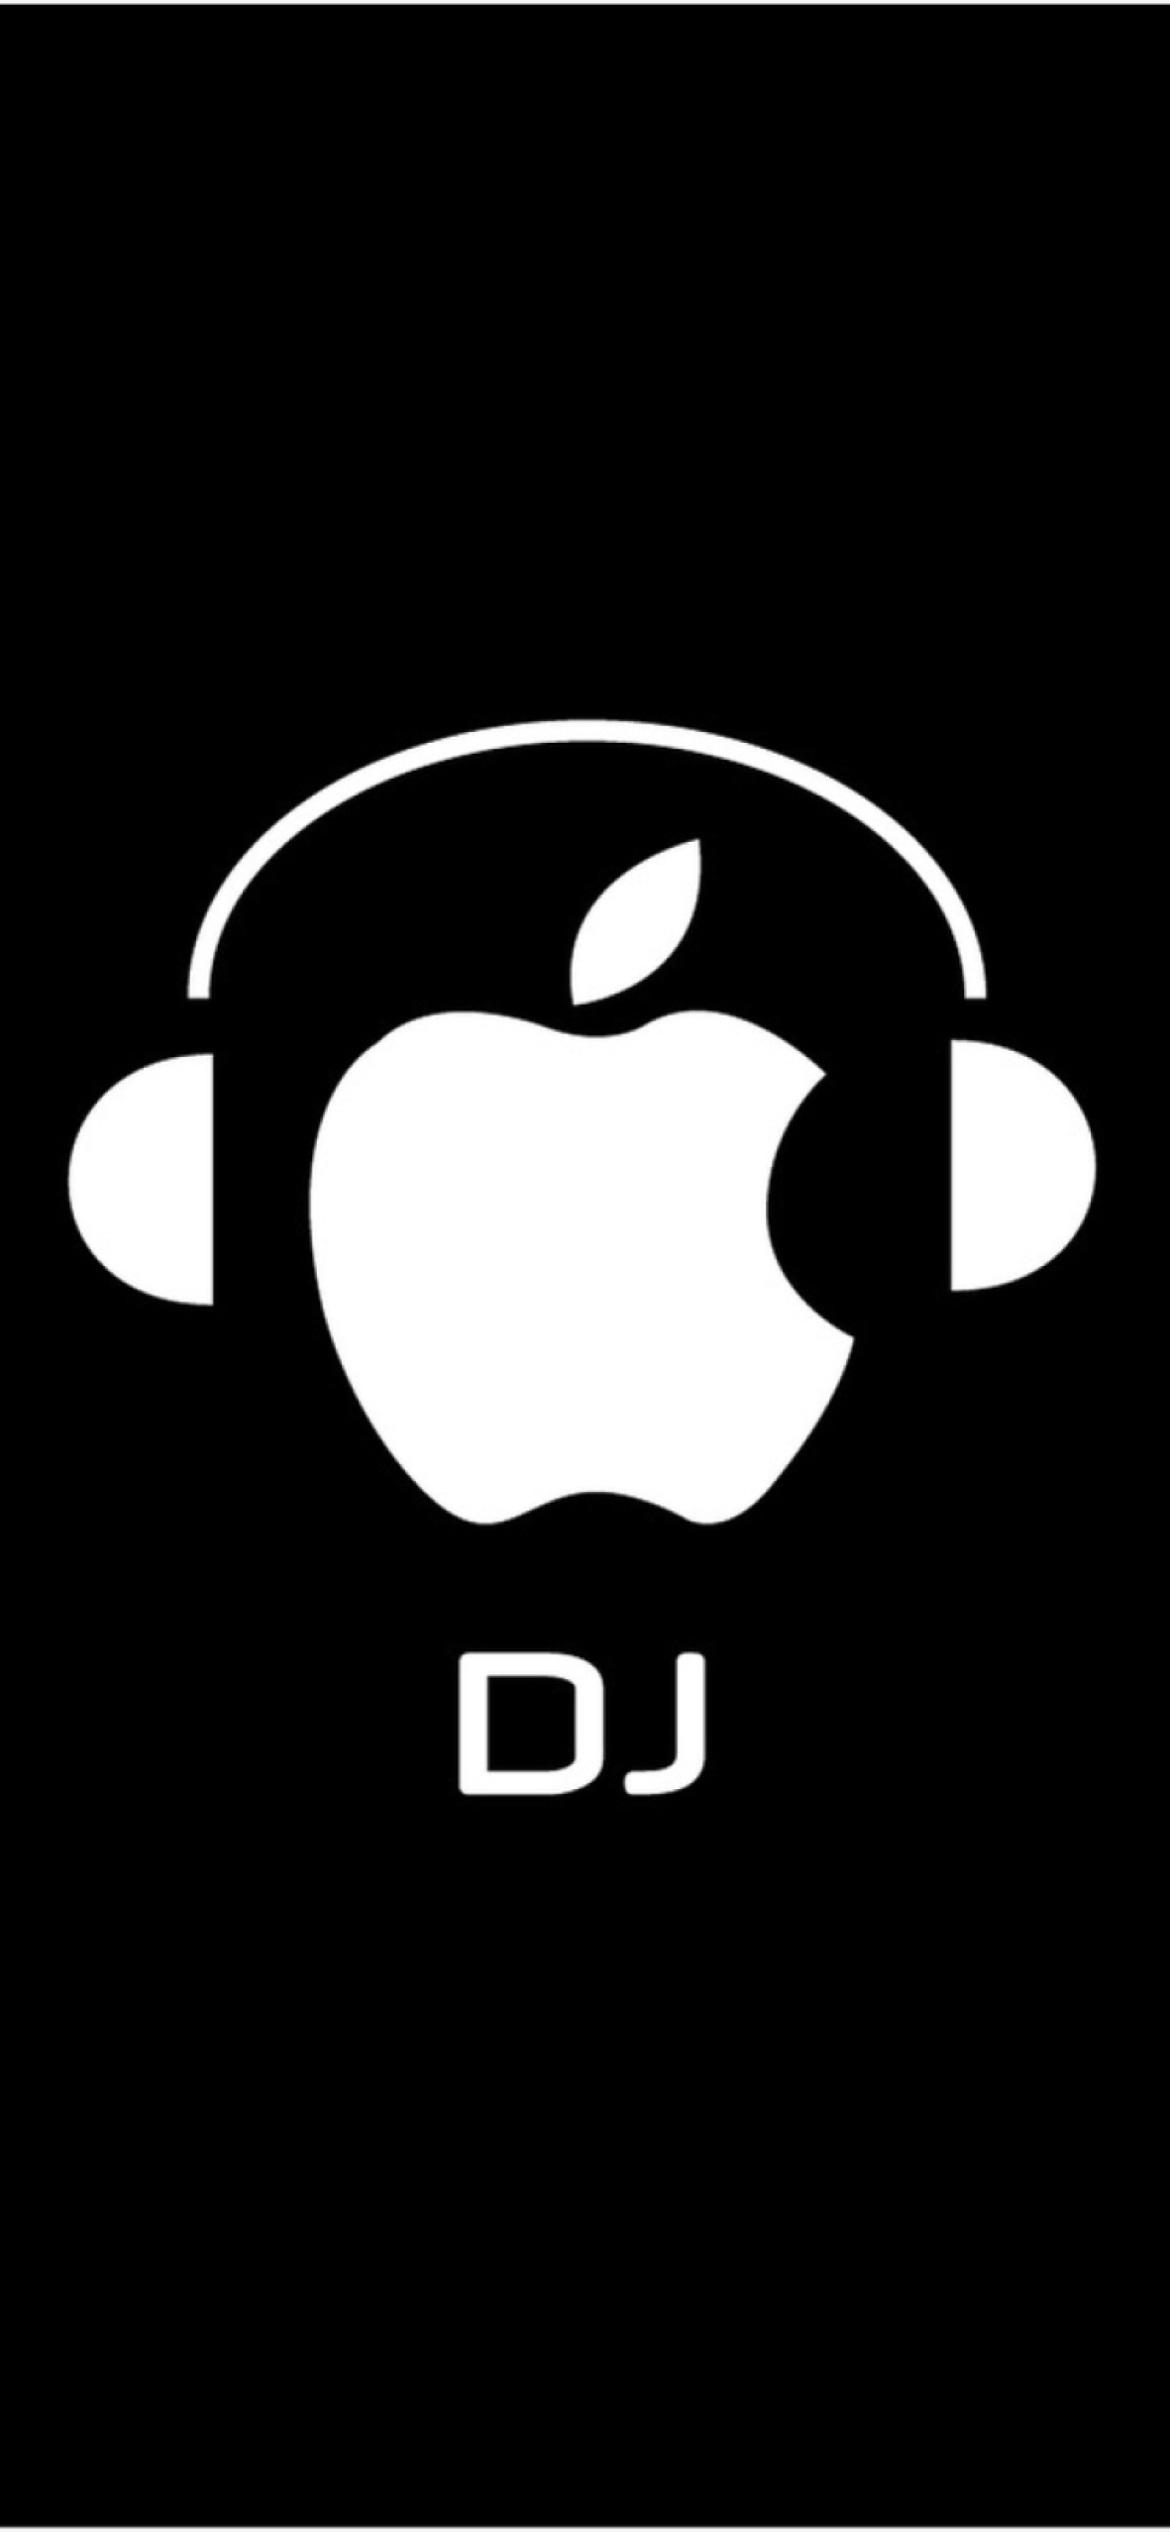 Das Apple DJ Wallpaper 1170x2532